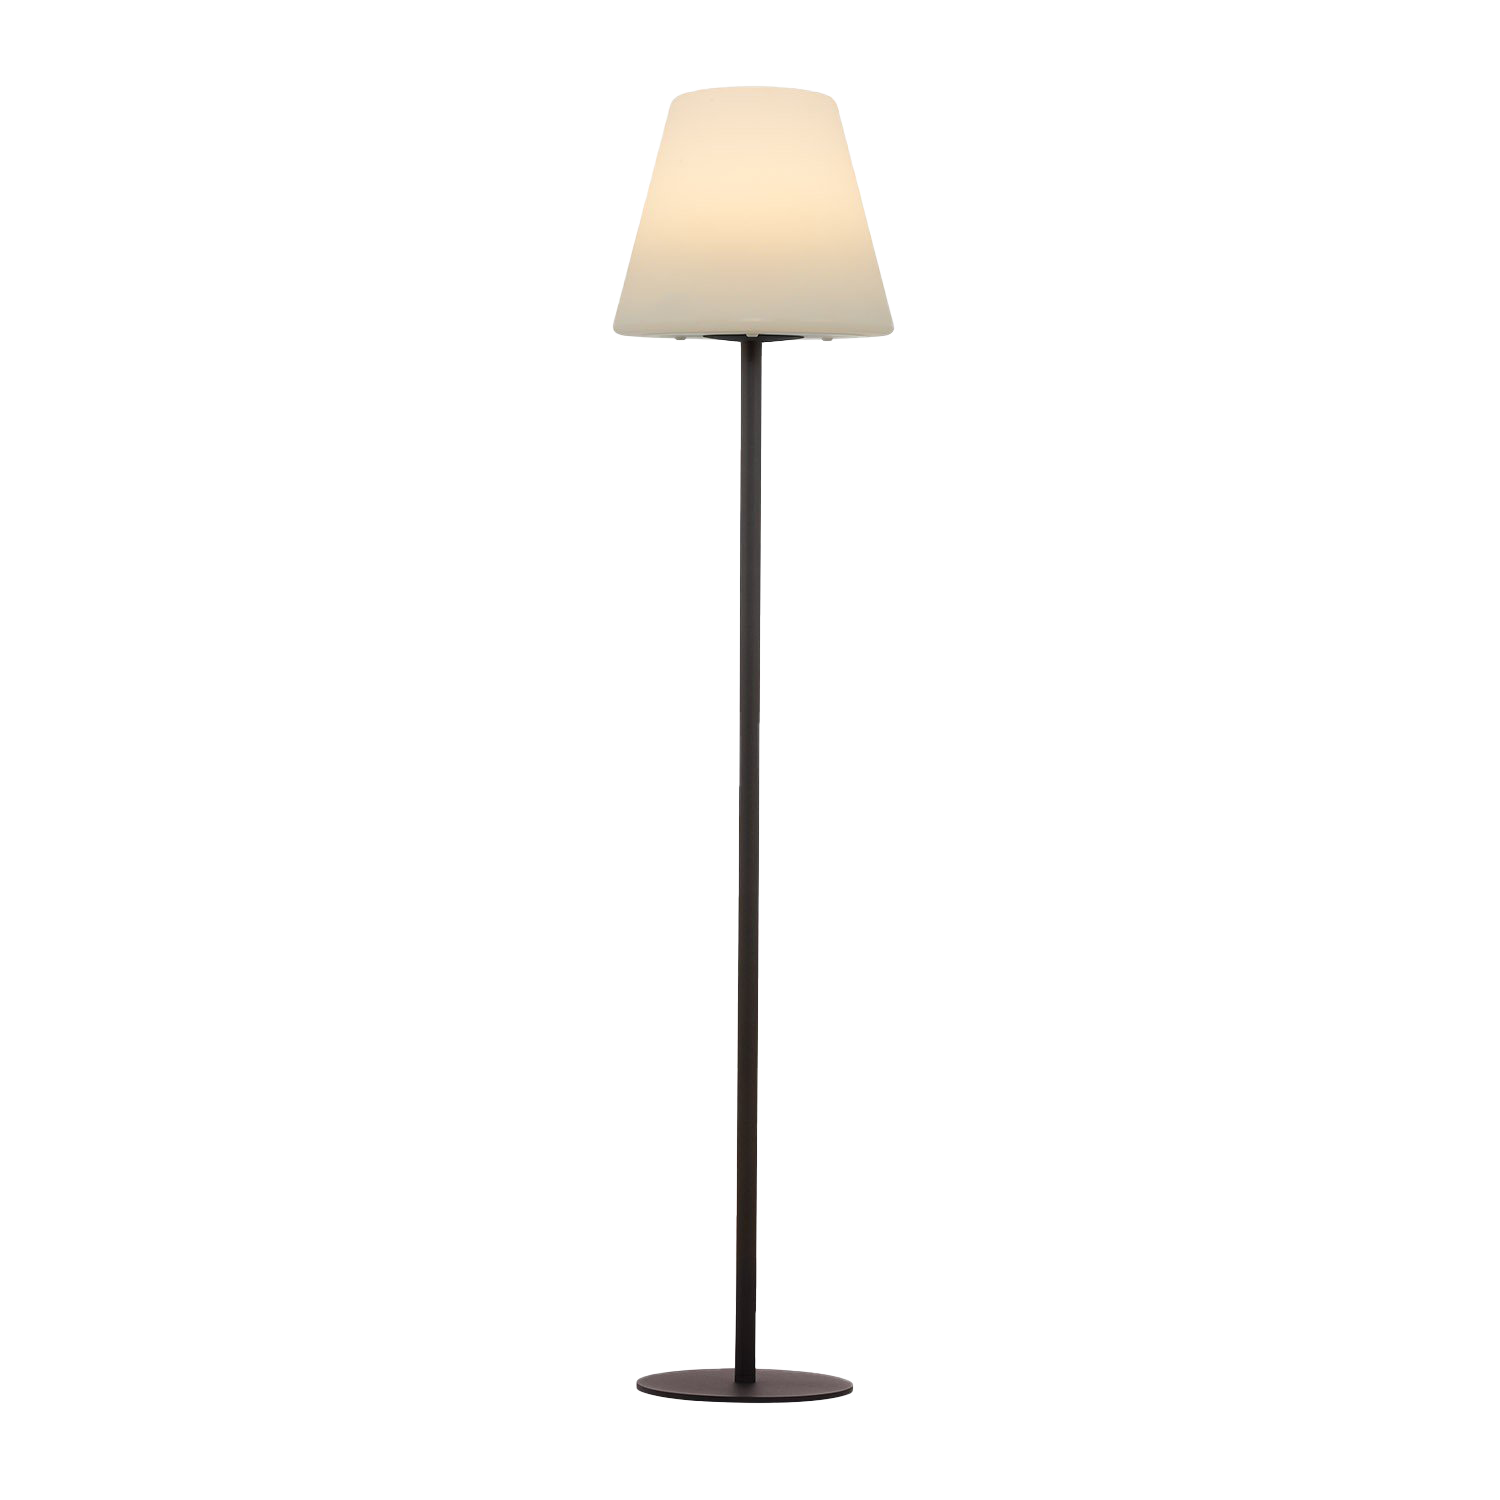 Lamp PNG Free File Download